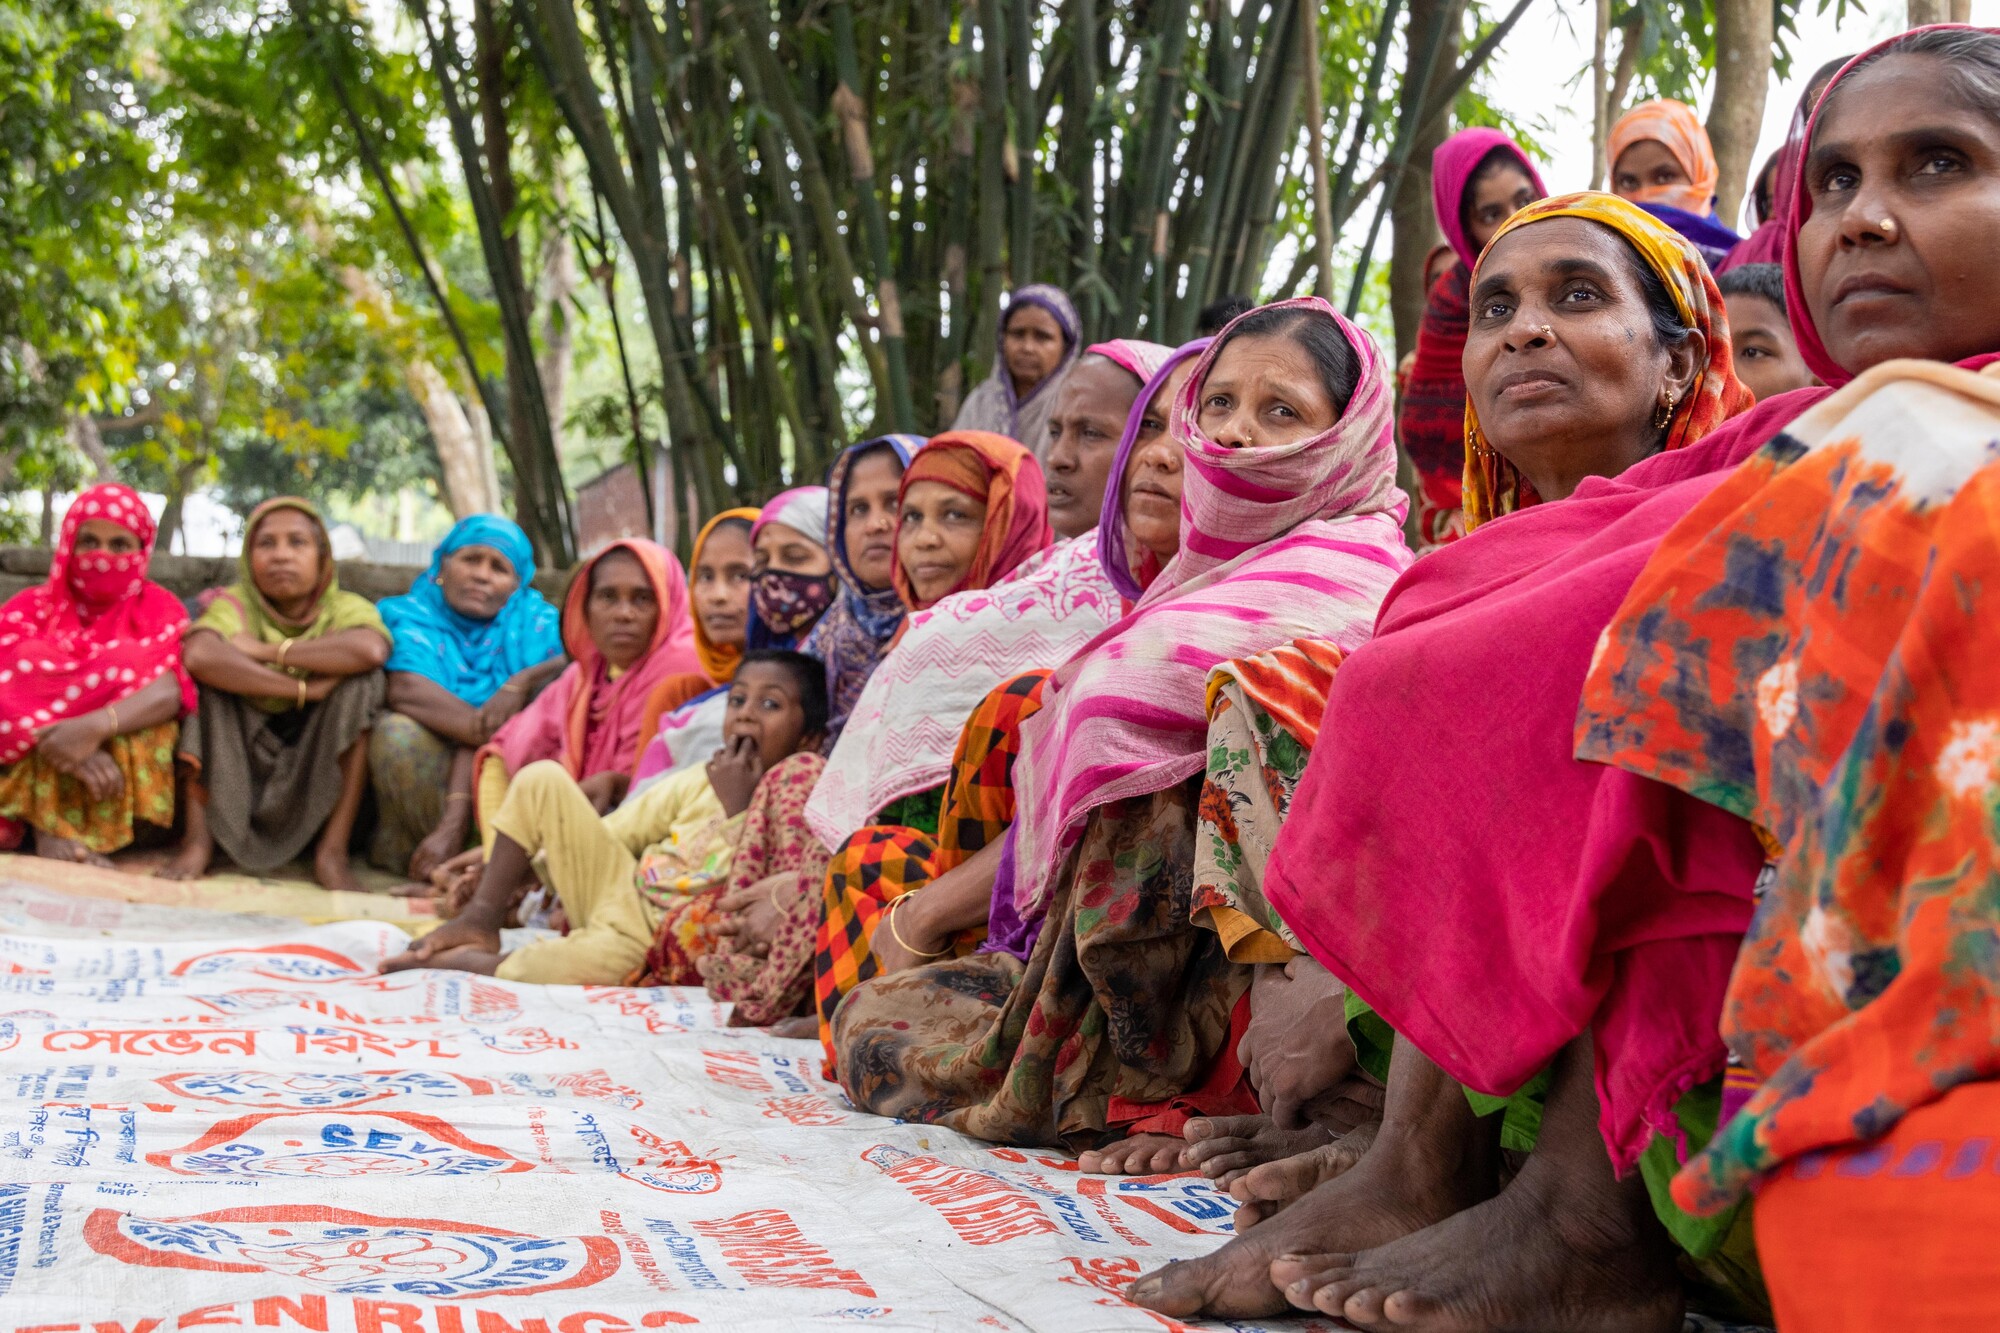 A group of Bangladeshi women sit on a mat outside